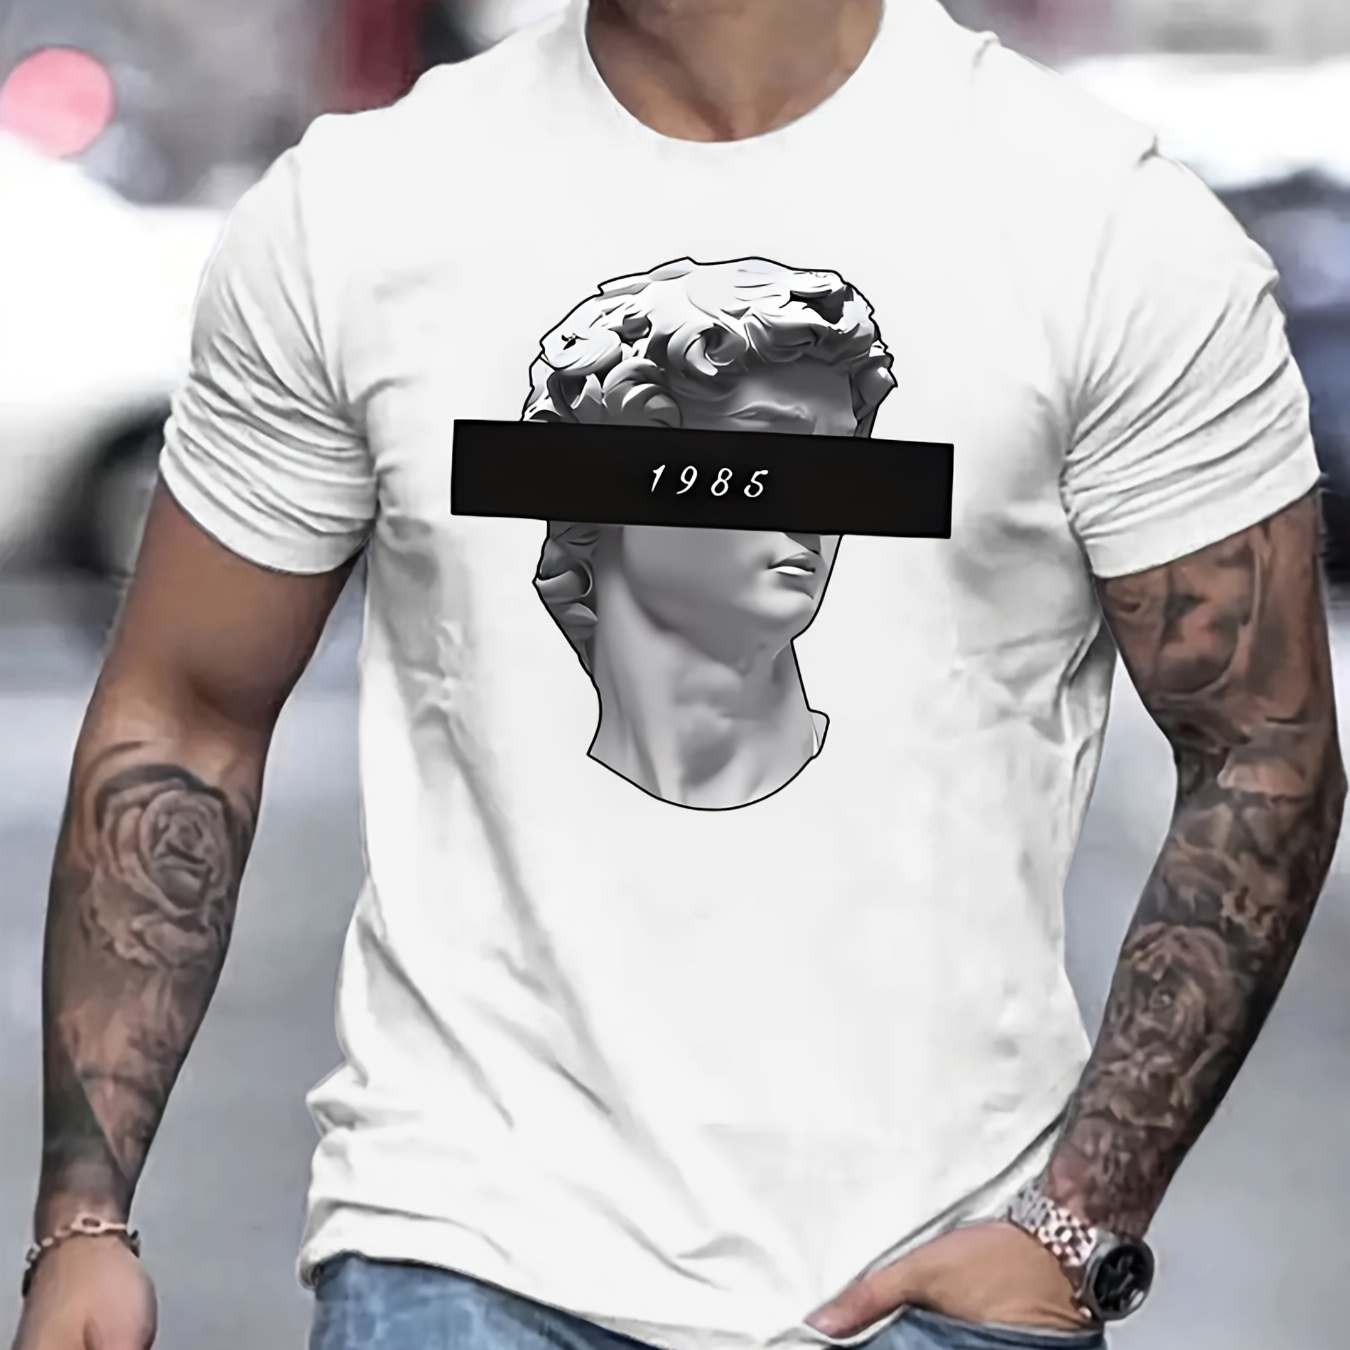 

Greek Head Statue Print T Shirt, Tees For Men, Casual Short Sleeve T-shirt For Summer